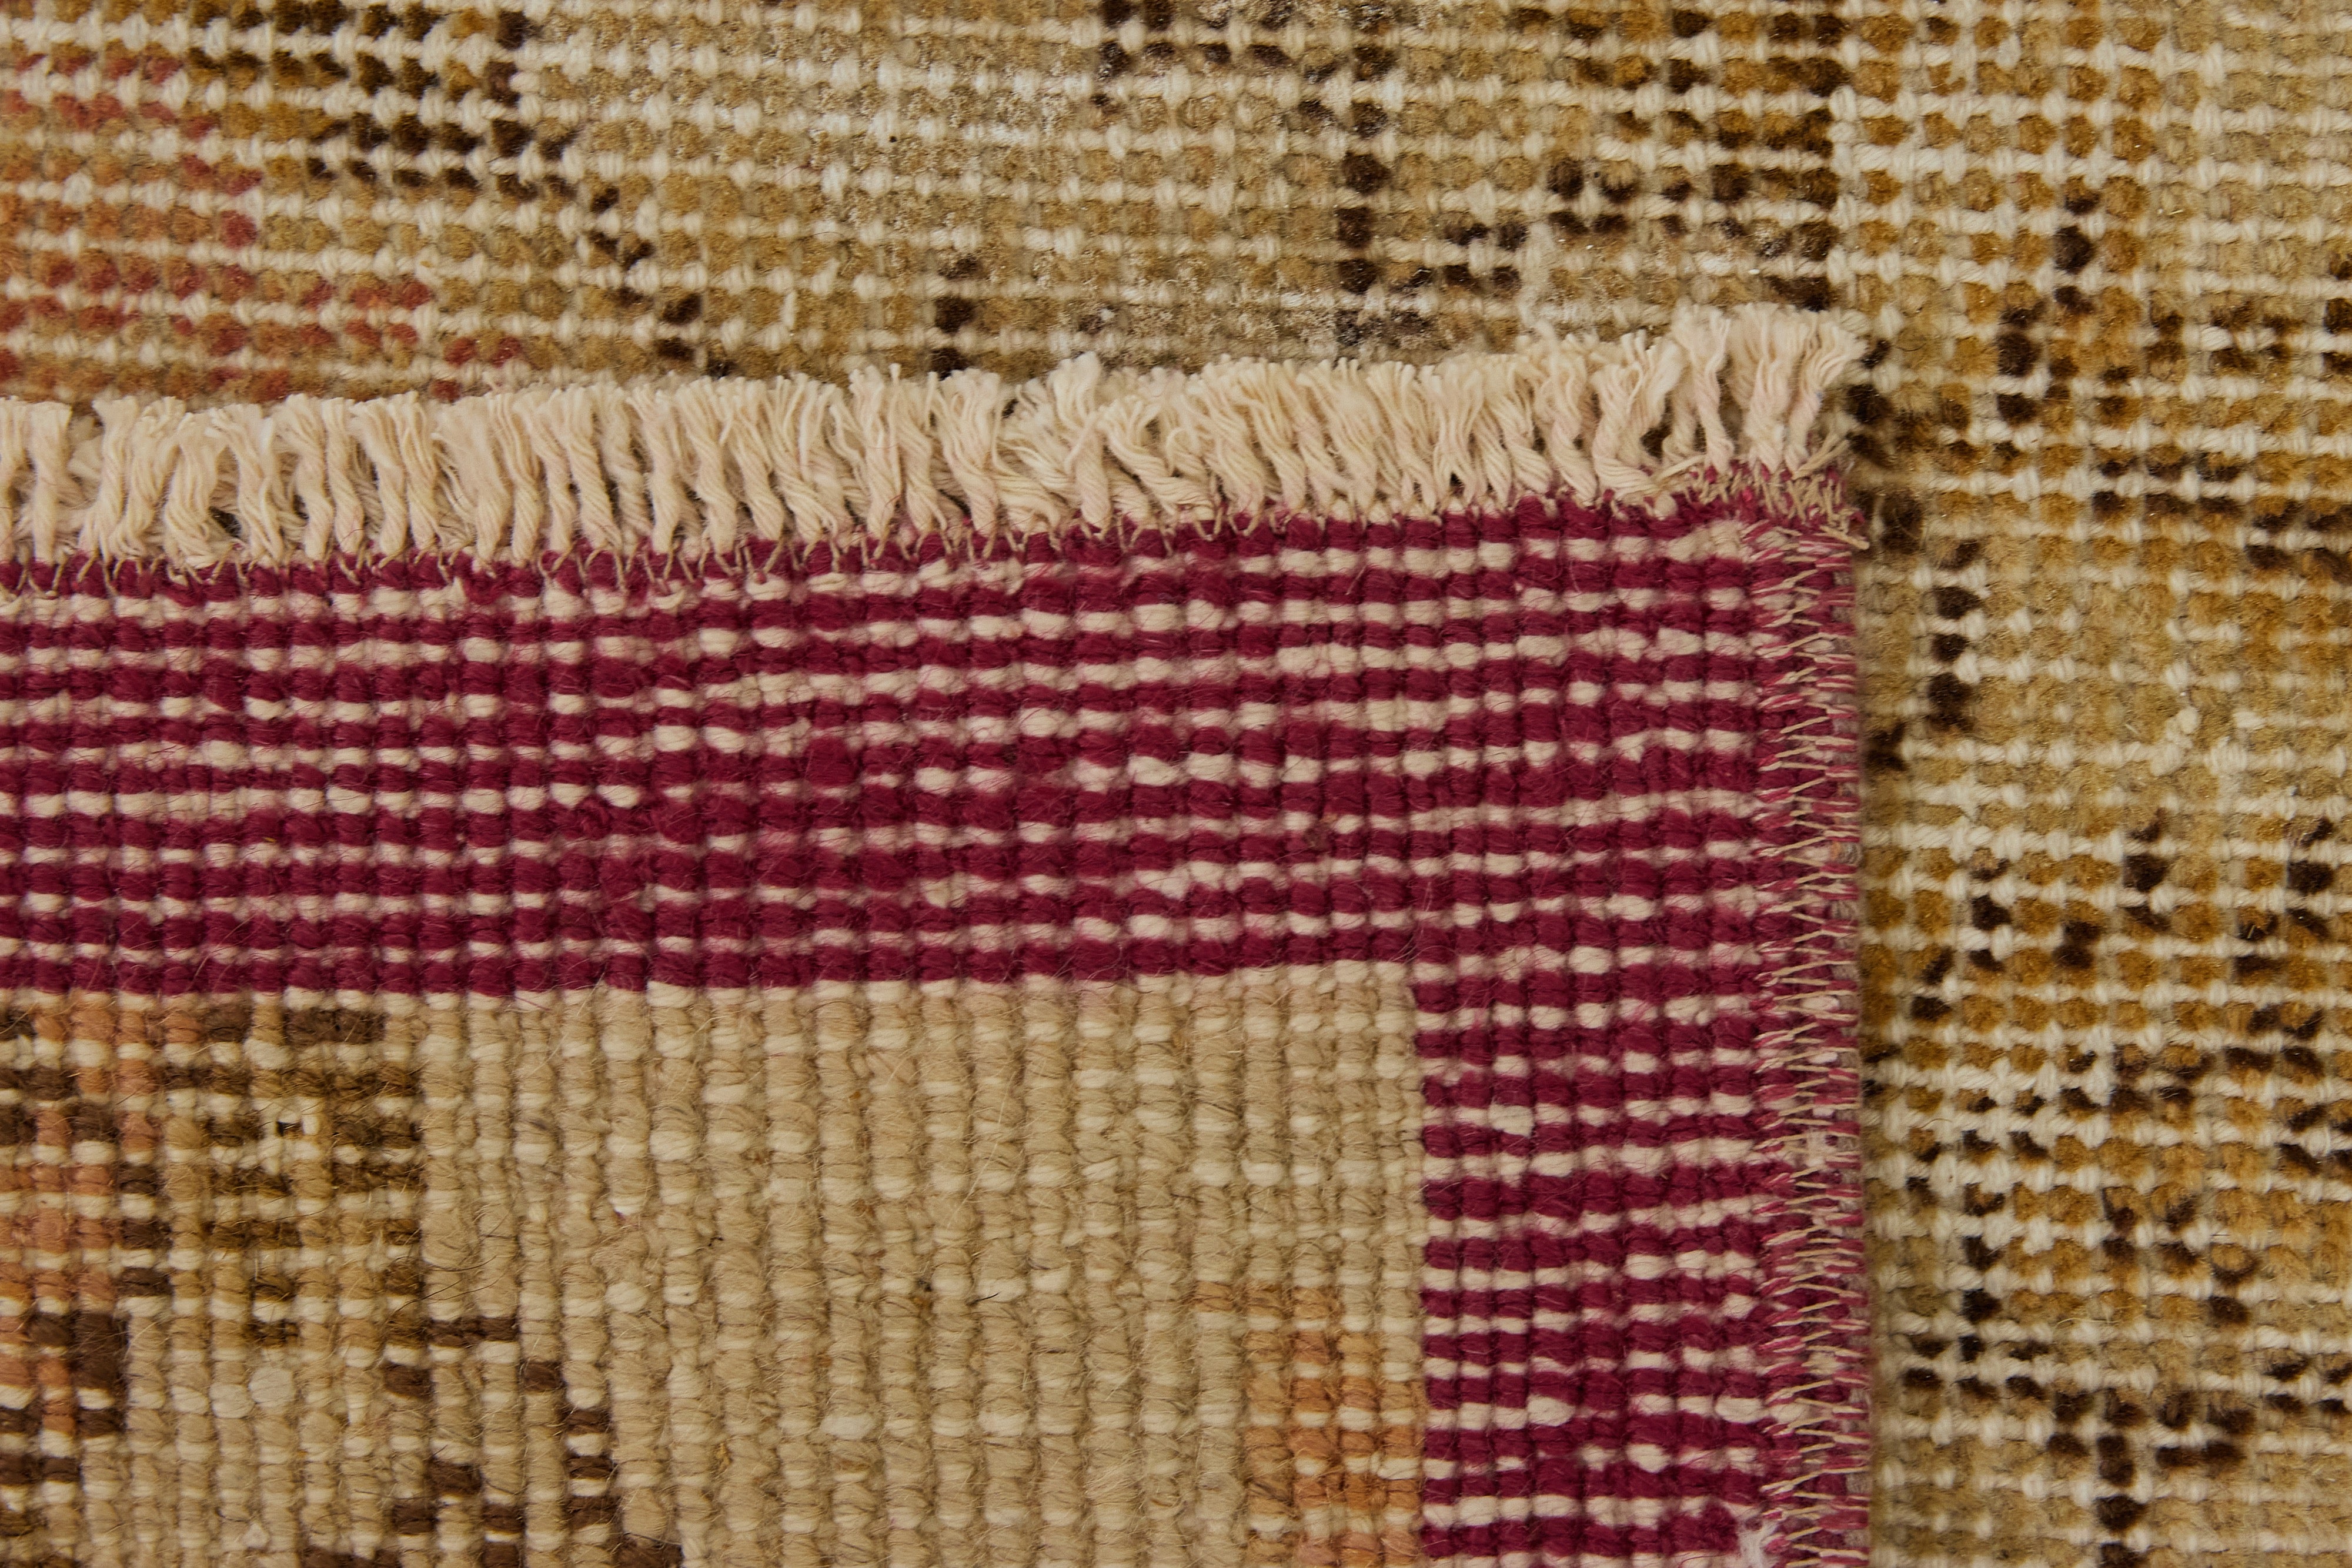 Refined Craftsmanship - Ziva's Expert Turkish Carpet Skill